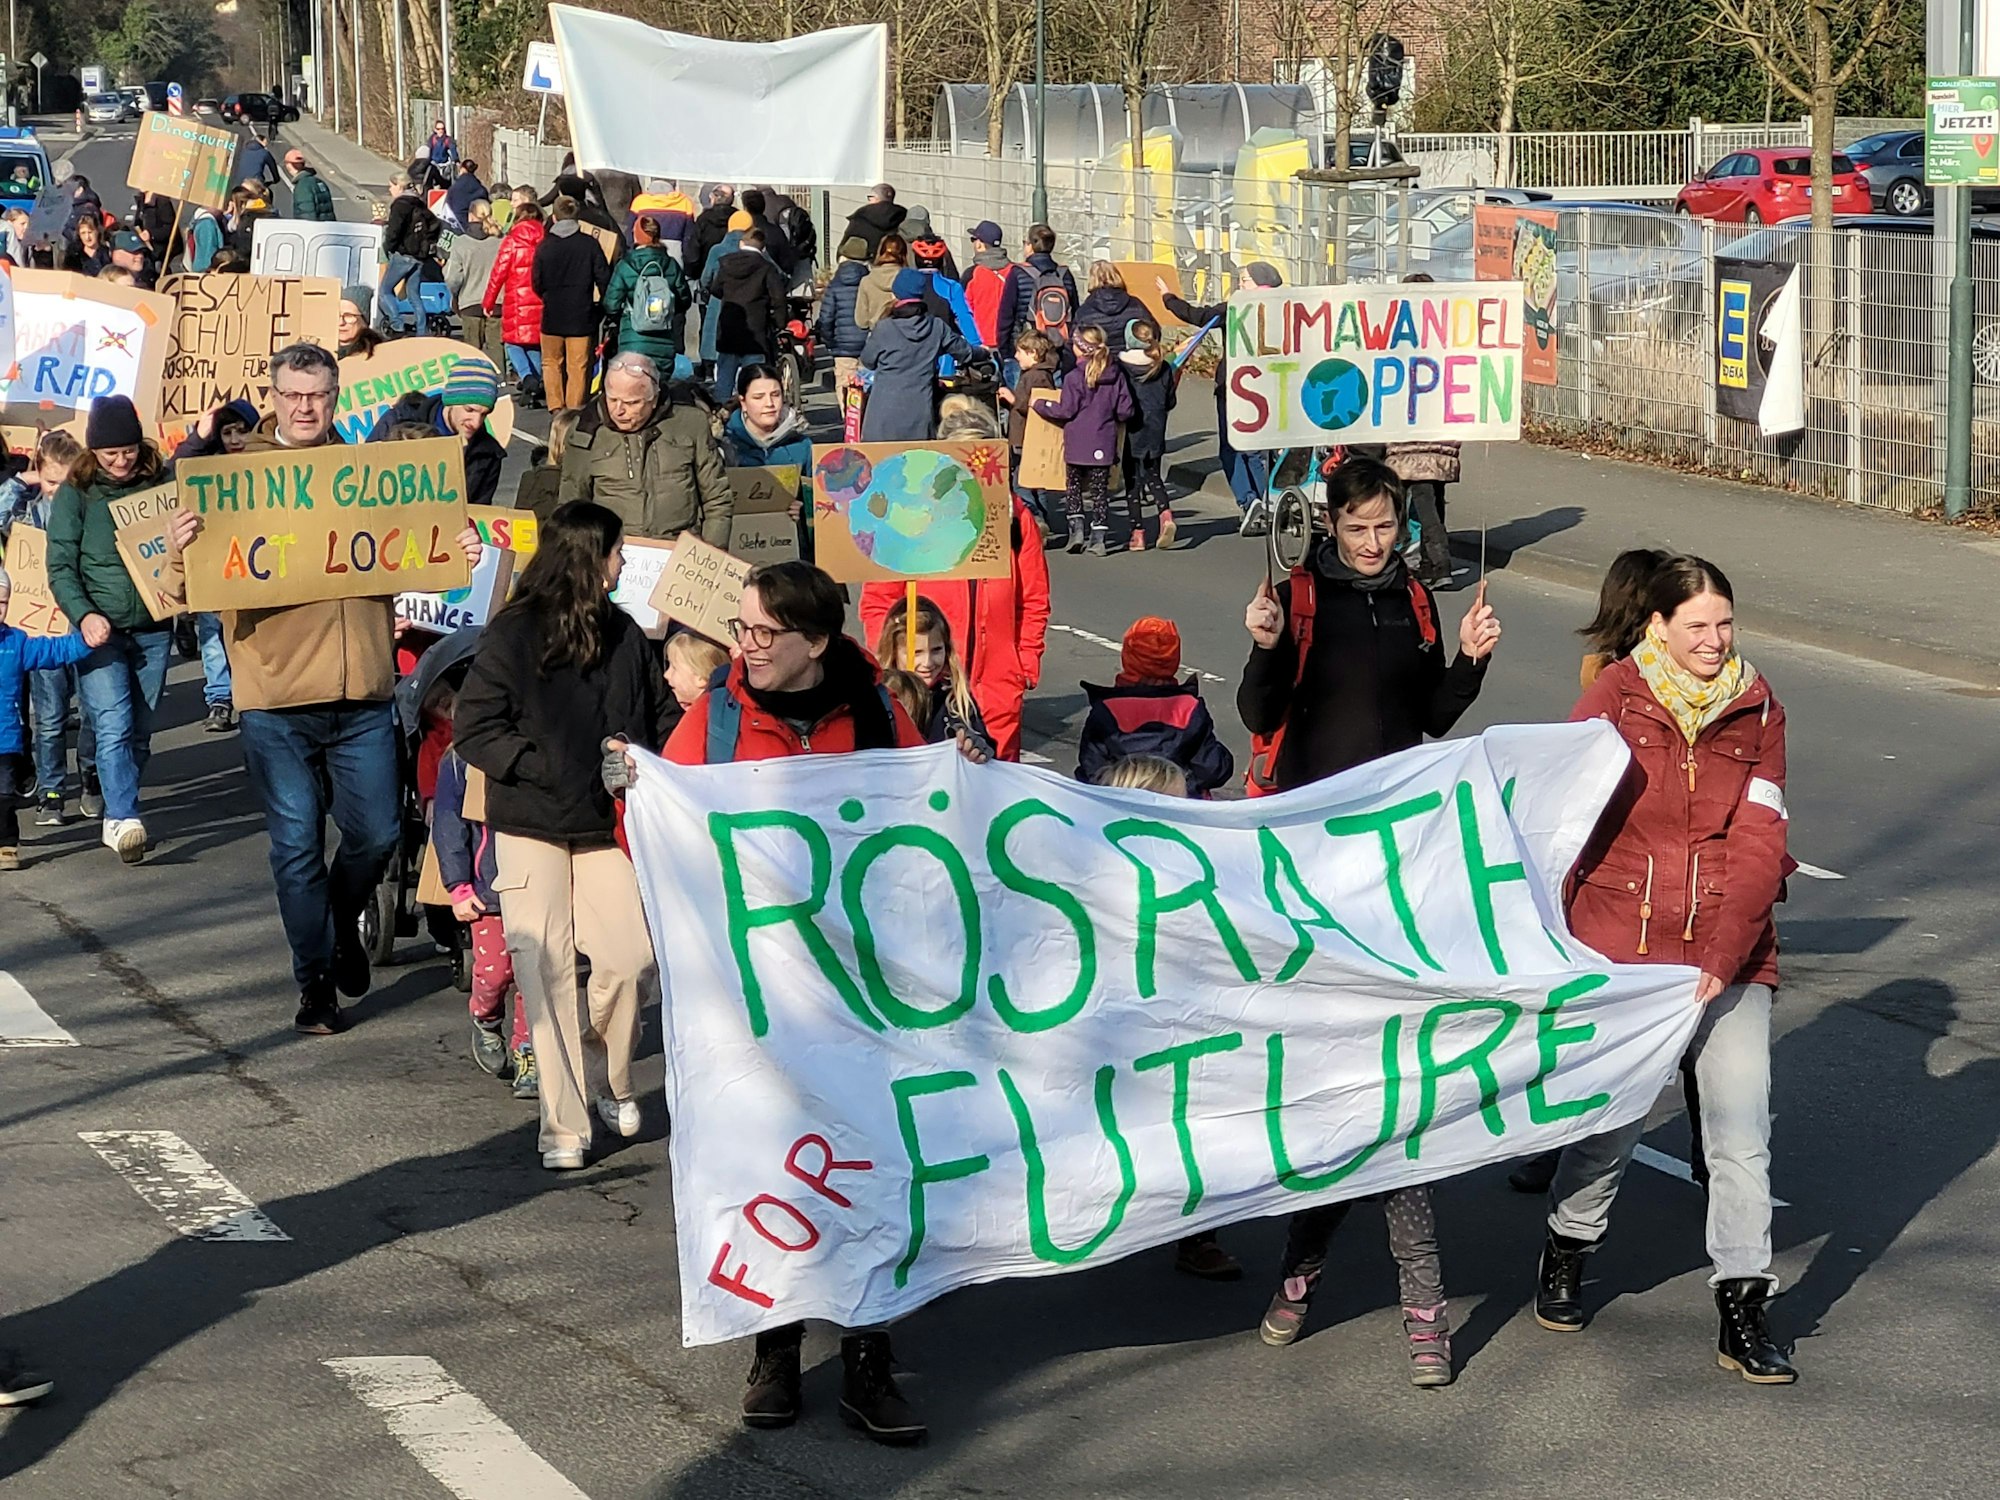 Klimademonstration Rösrath, Rösrath for Future